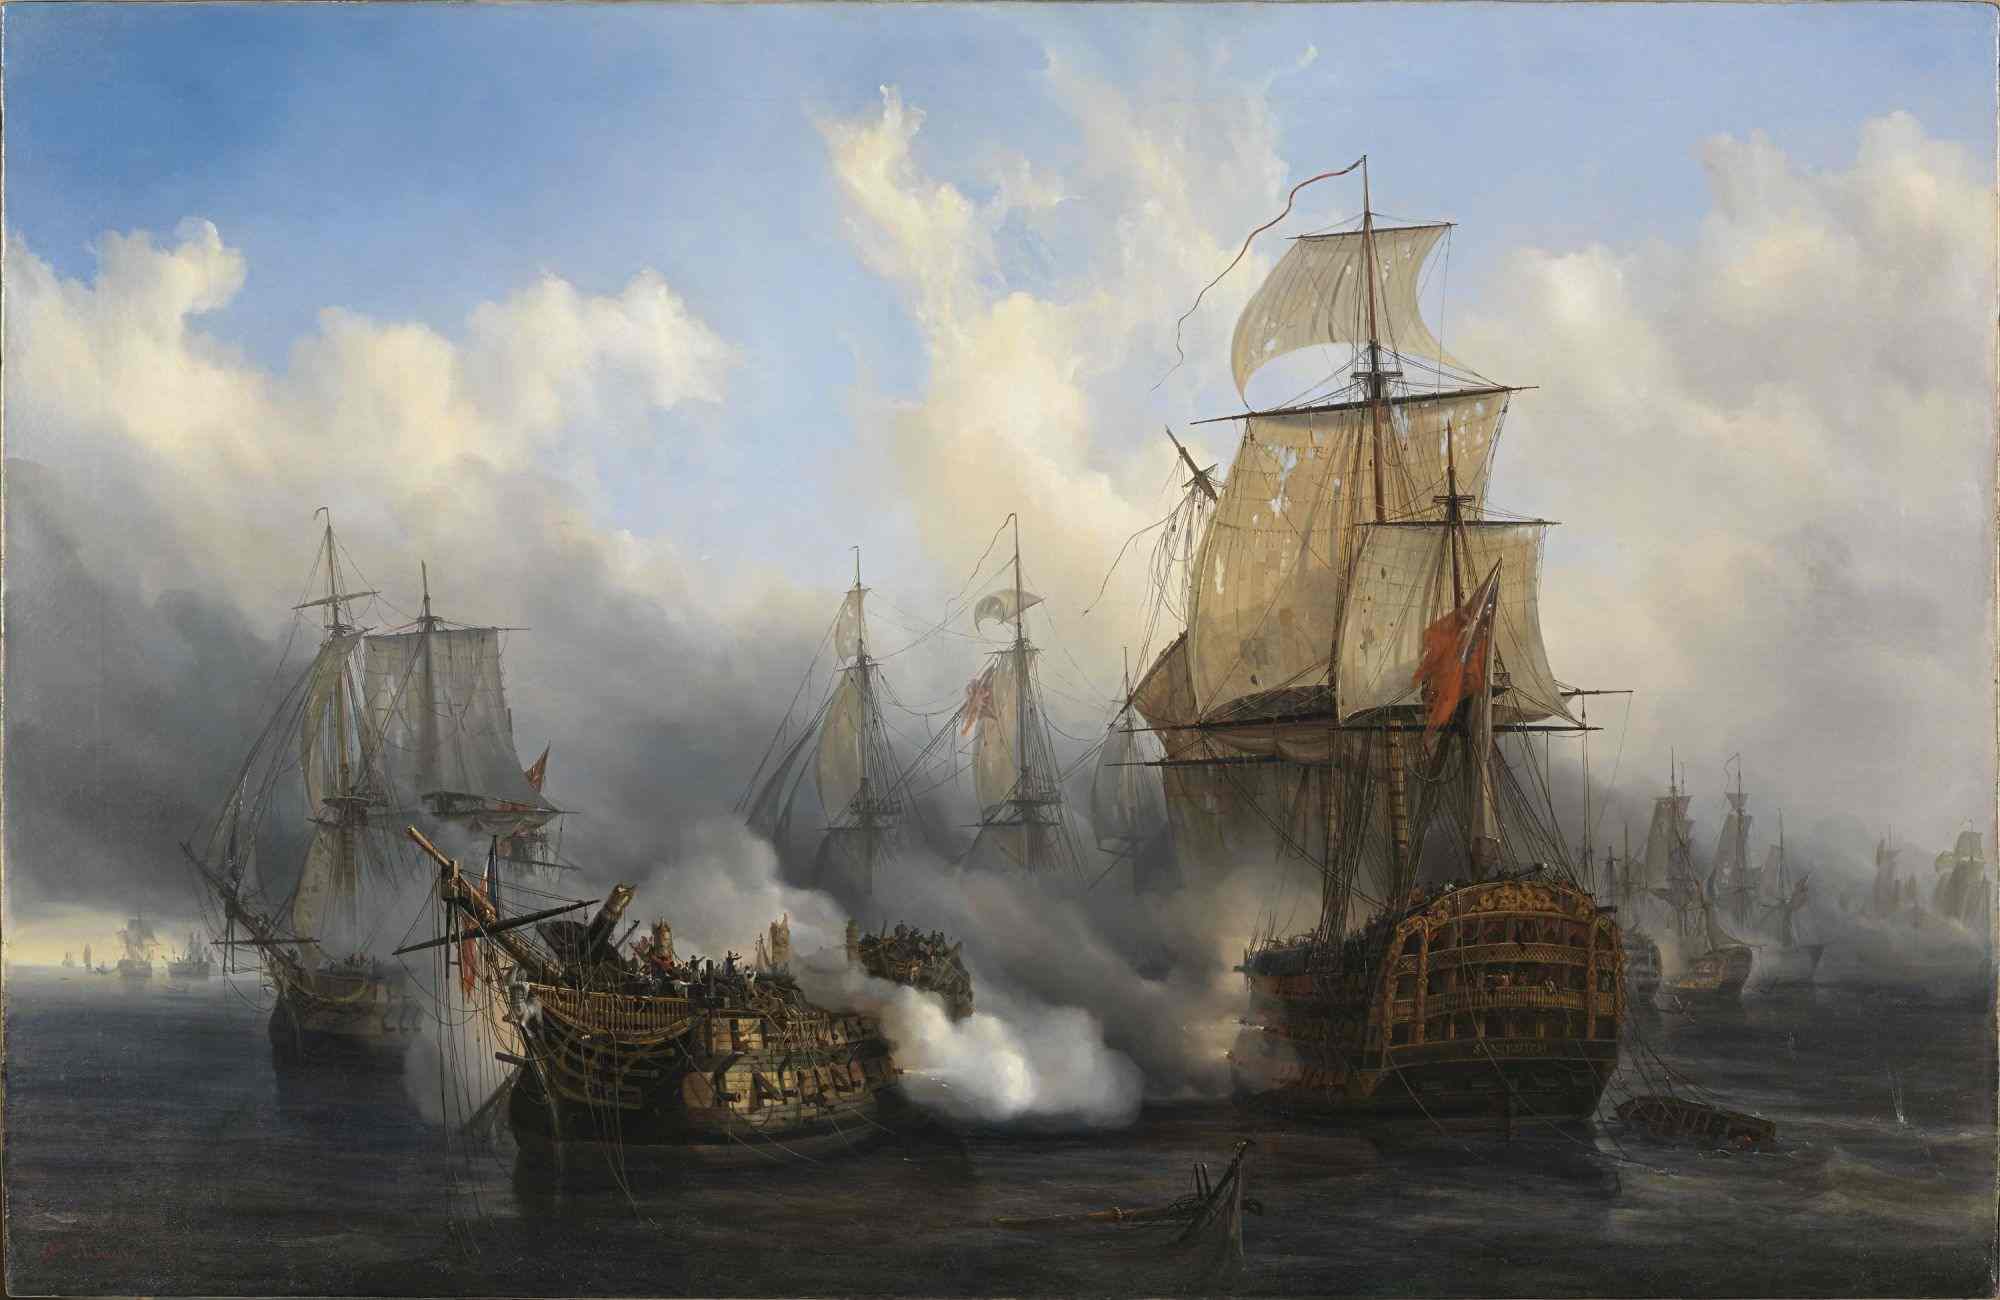 Bataille de Trafalgar, 1805 - Wikipedia commons